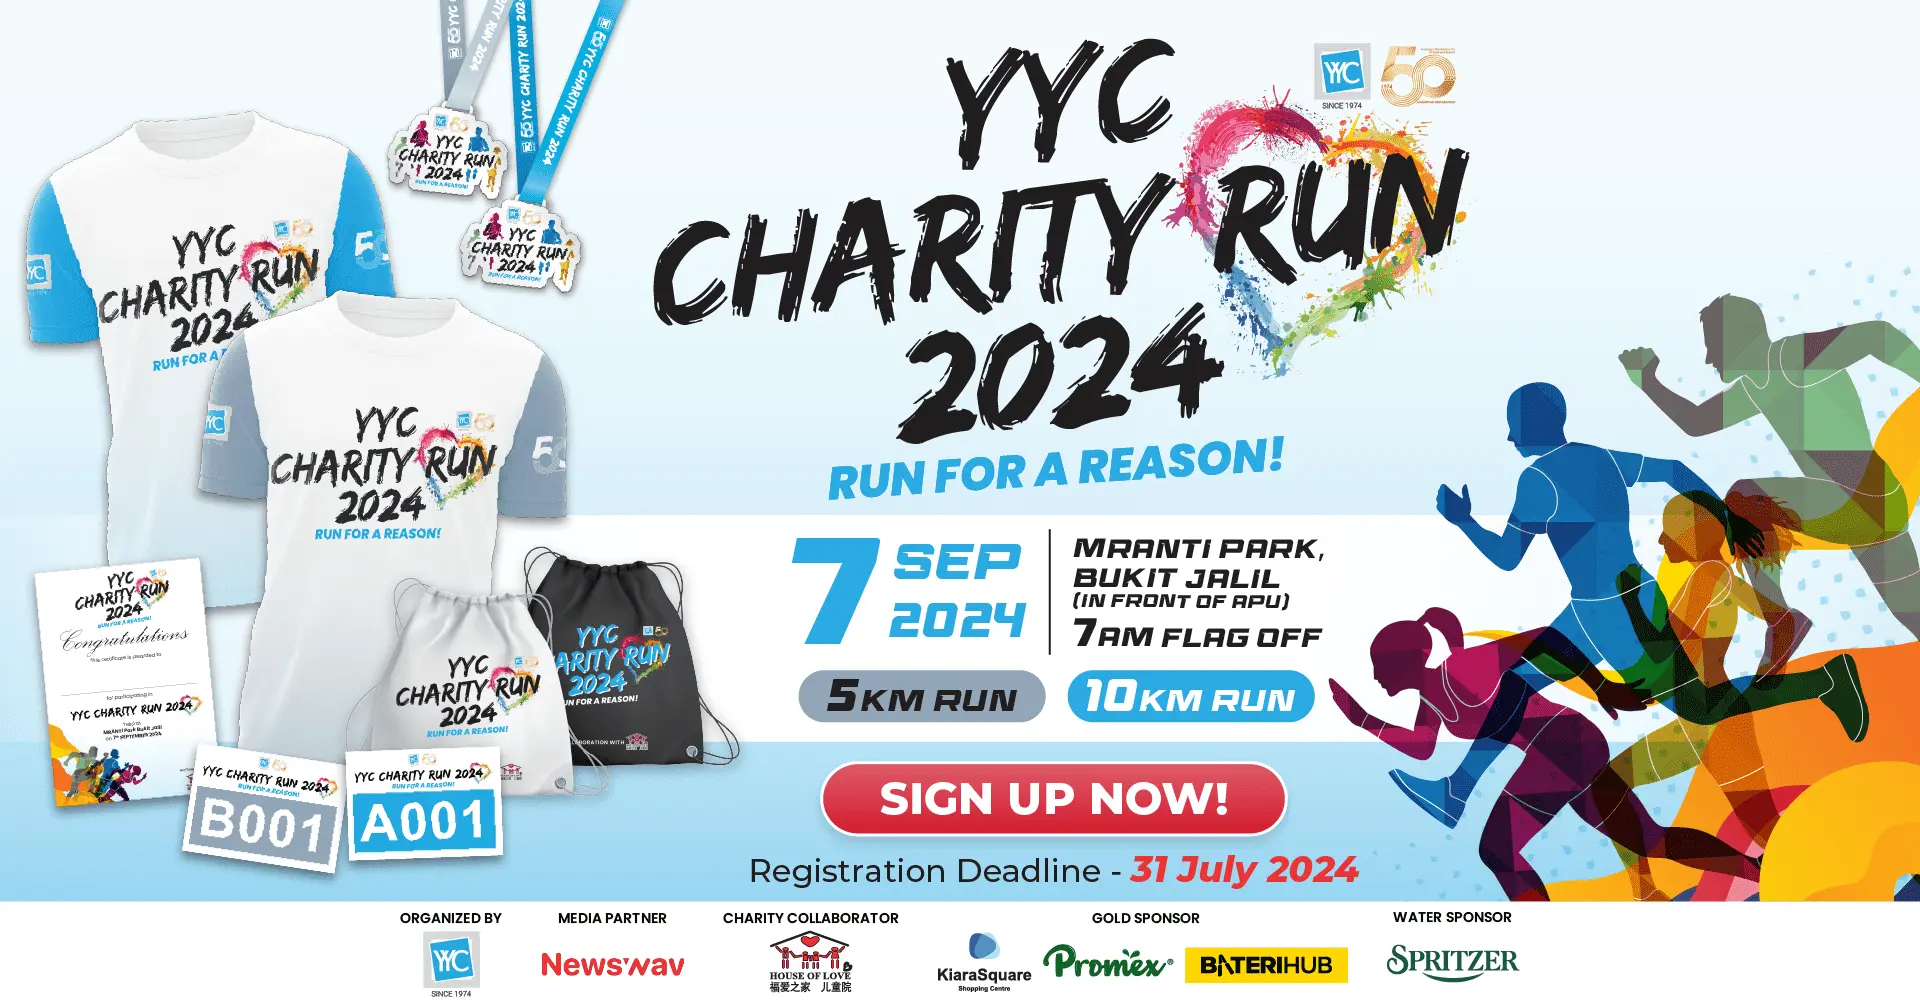 YYC Charity Run 2024